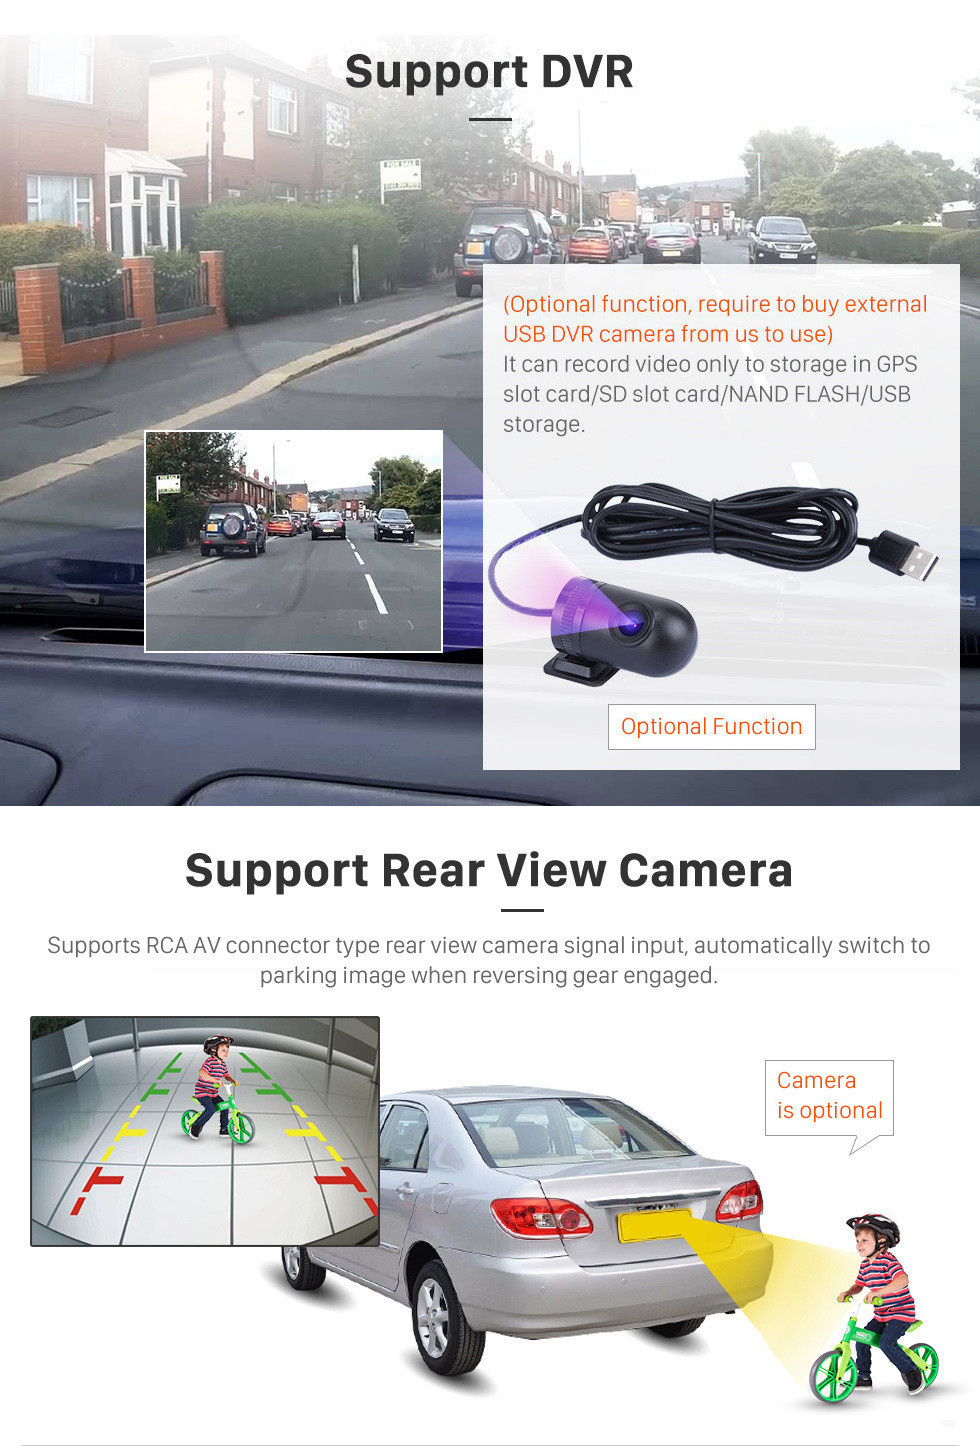 Seicane Écran tactile HD 2015 Suzuki Wagon Android 11.0 9 pouces GPS Navigation Radio Bluetooth WIFI USB Support Carplay DAB + TPMS OBD2